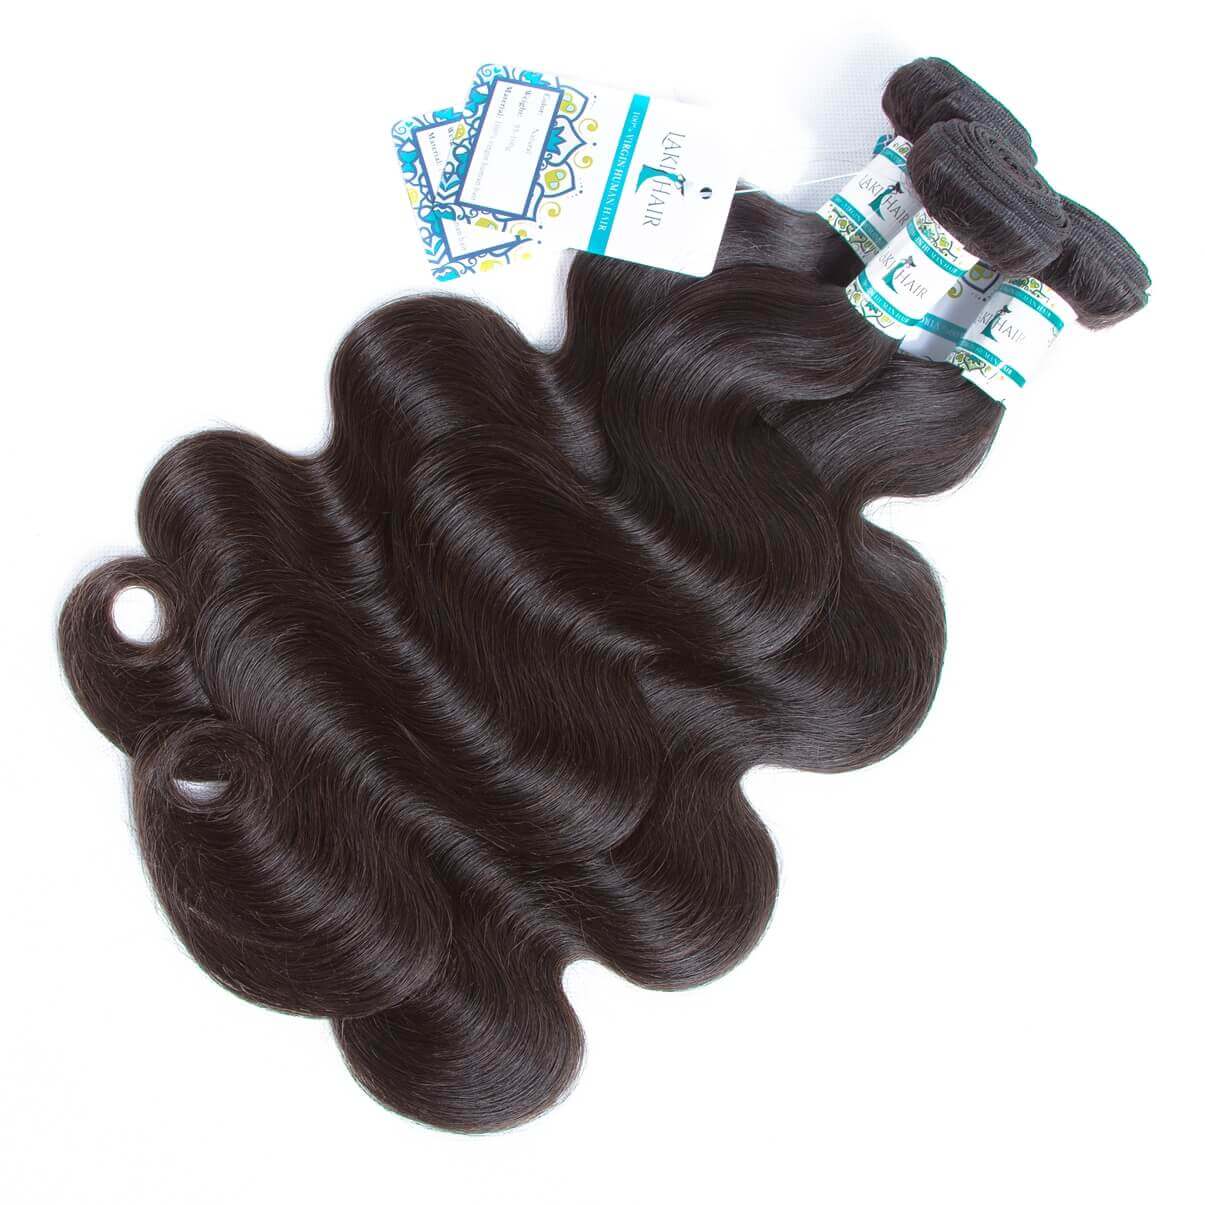 Lakihair Brazilian Body Wave Human Hair Weaving 3 Bundles Unprocessed Virgin Human Hair Extensions